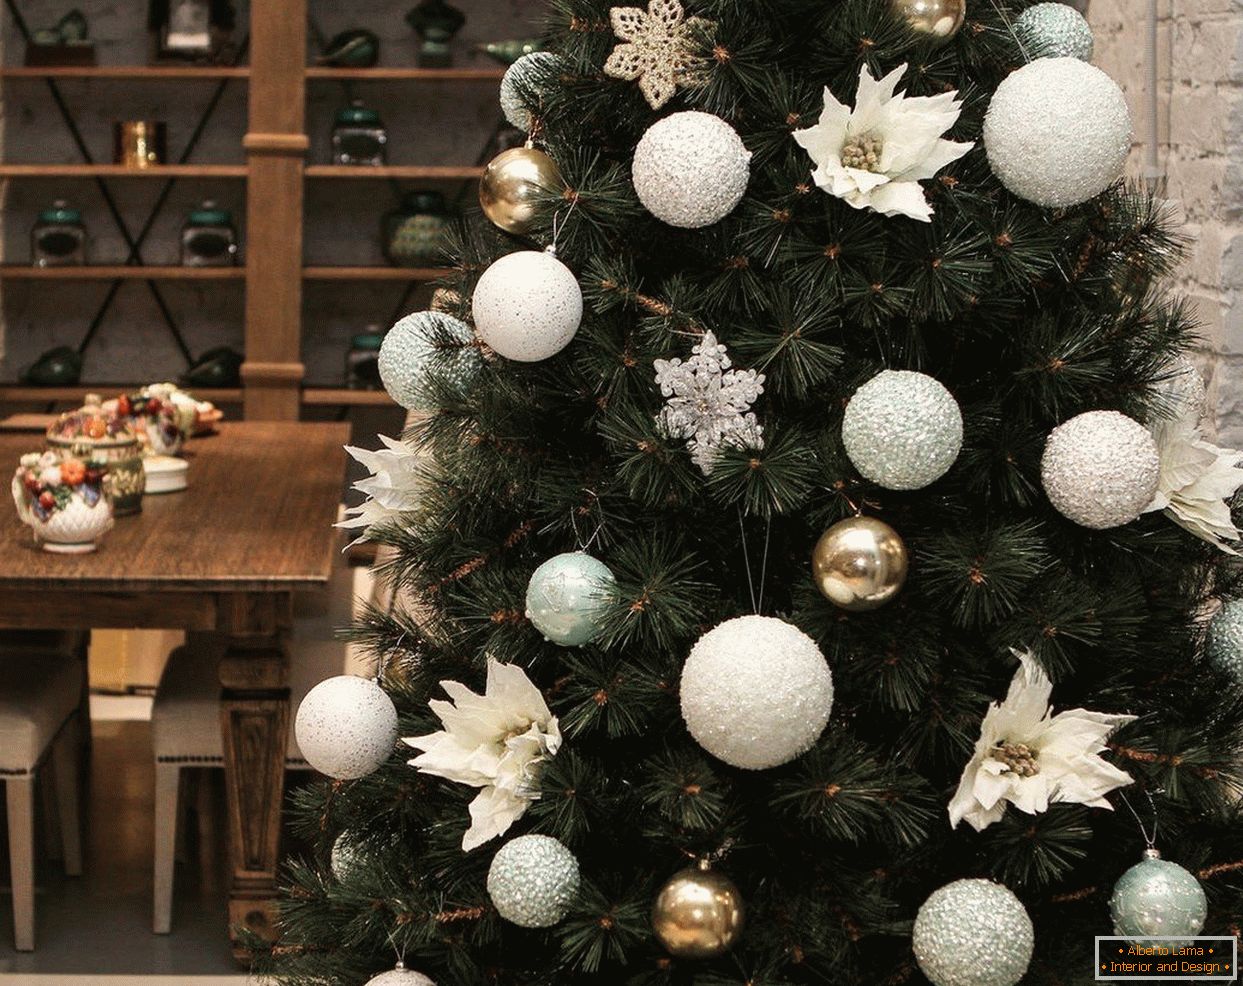 White balls on the Christmas tree